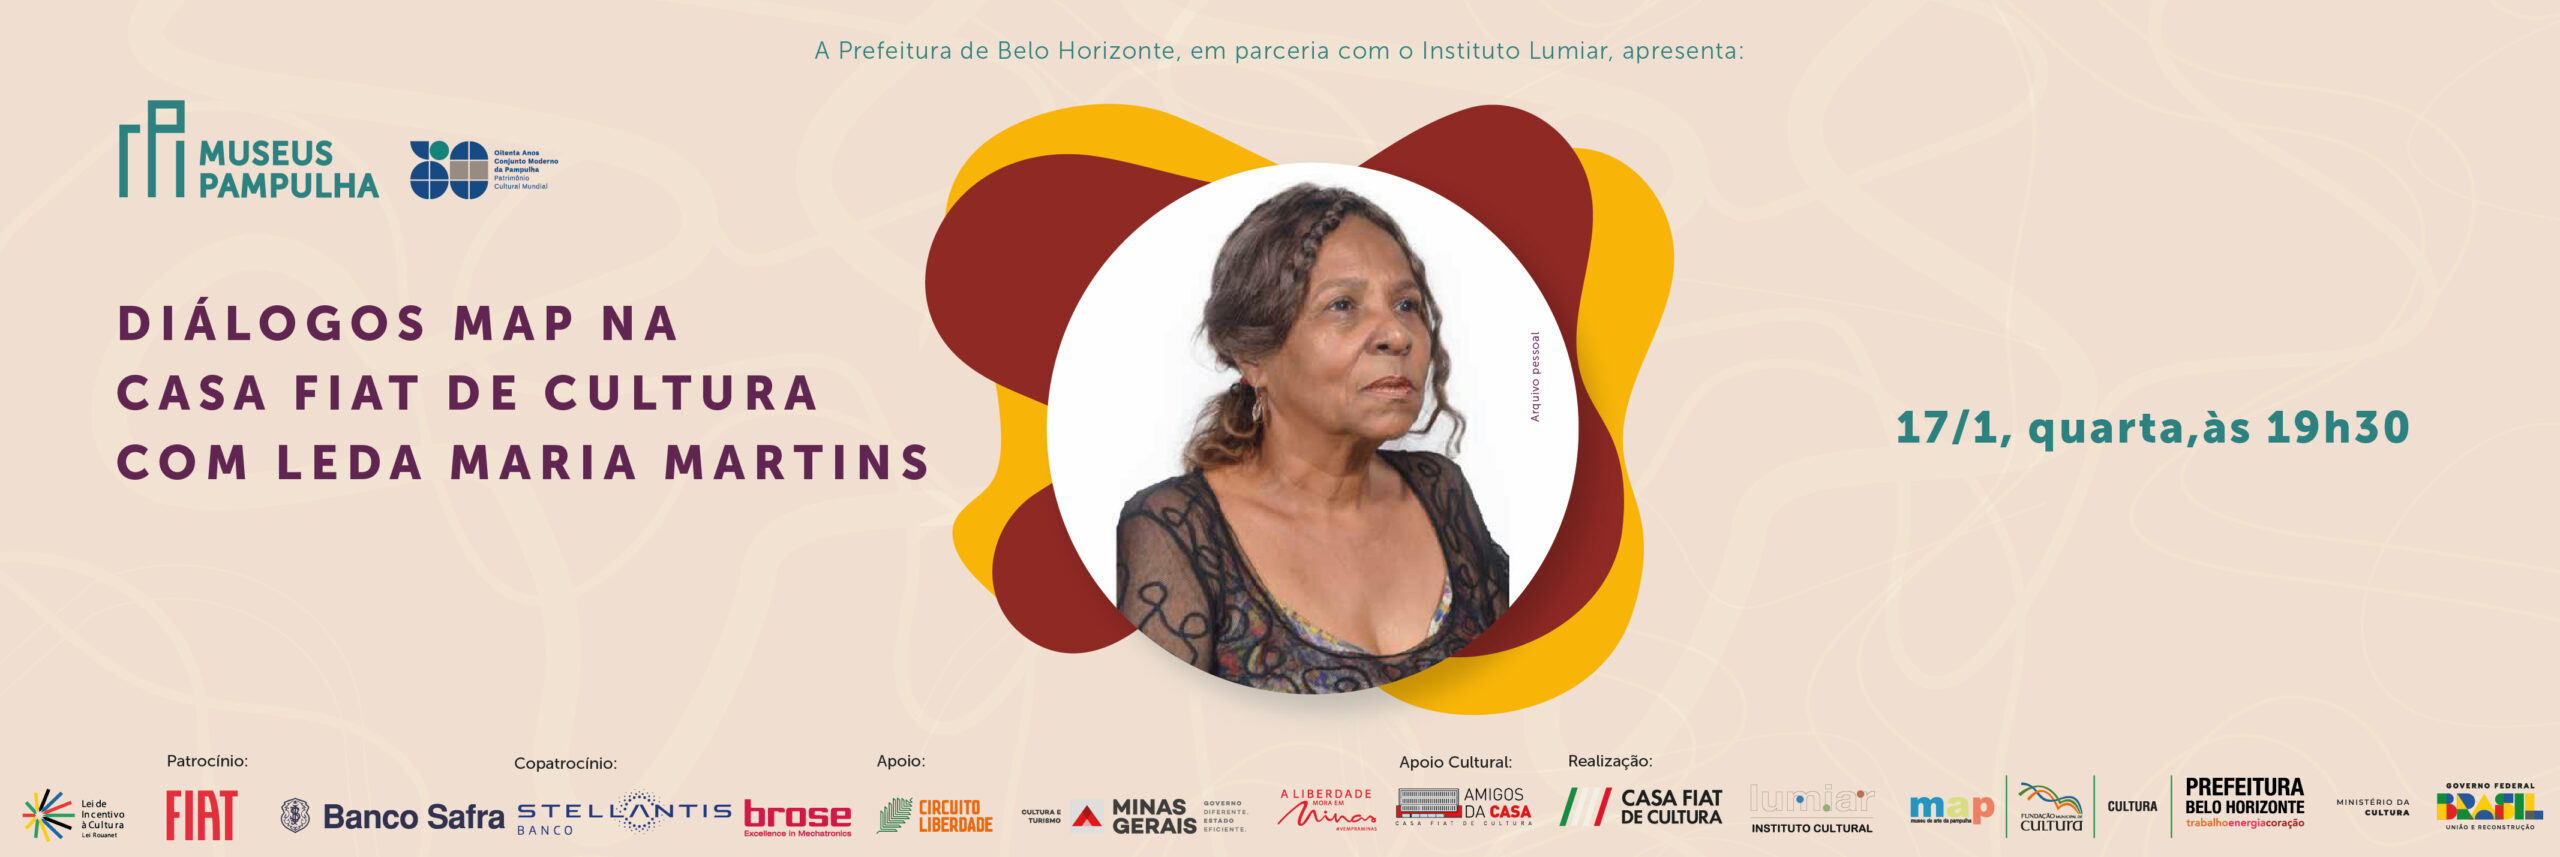 Diálogos MAP na Casa Fiat de Cultura com Leda Maria Martins